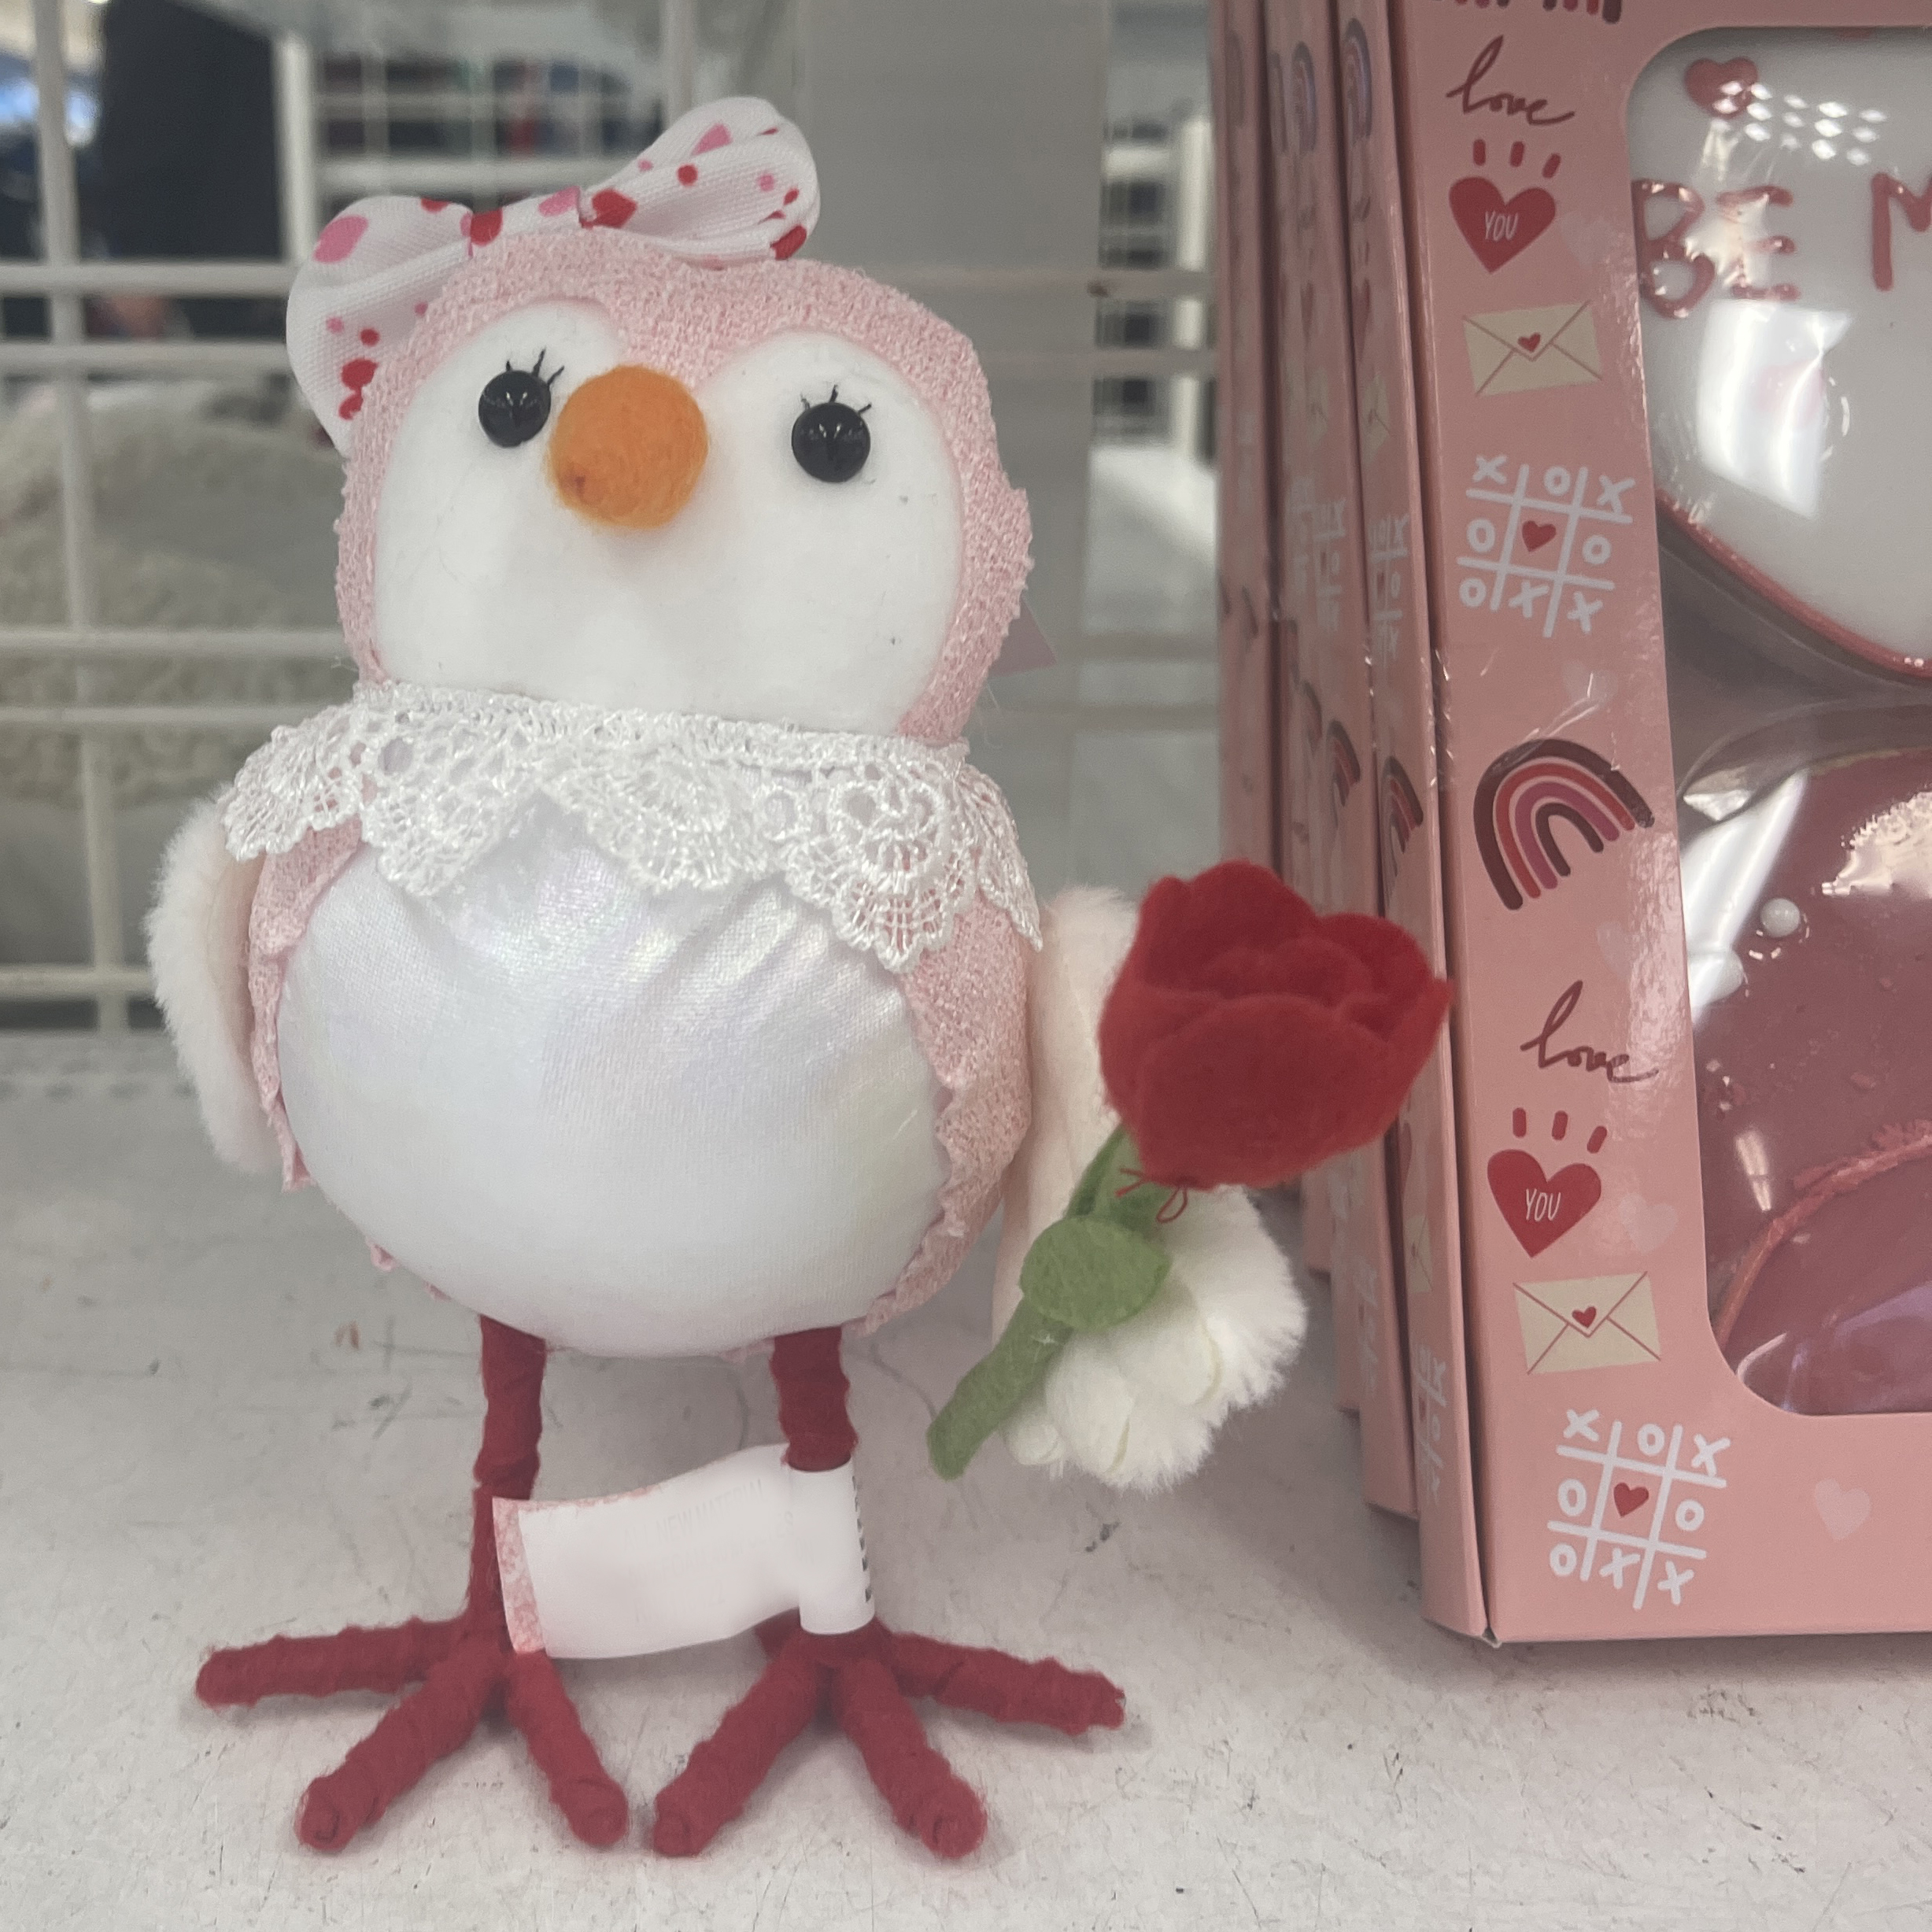 Valentine’s Day gift felt bird holding a rose